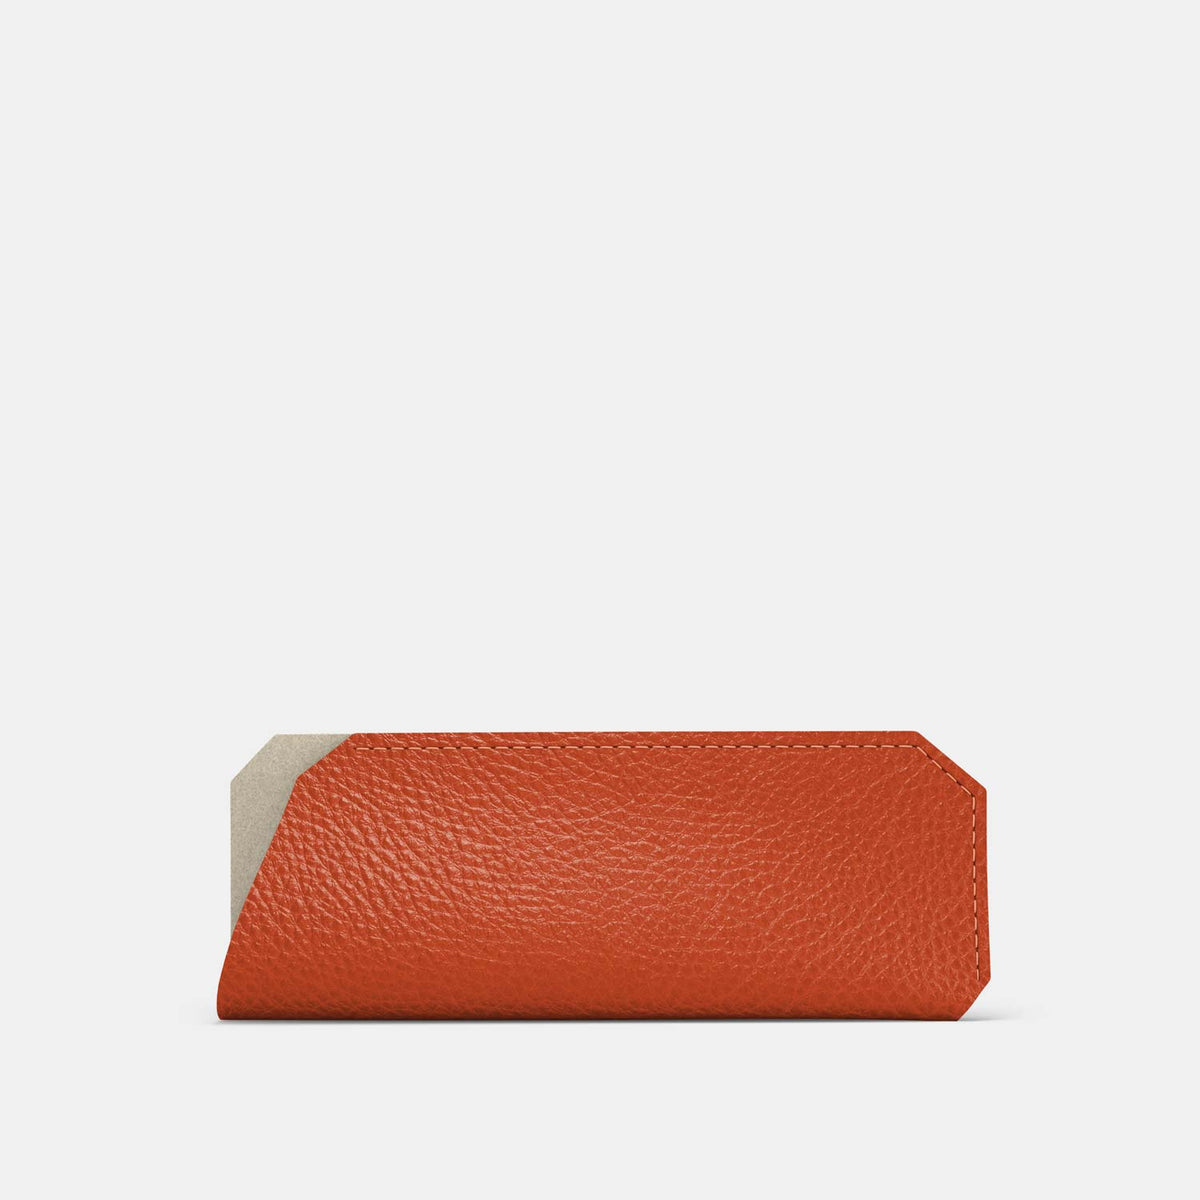 Leather Glasses case - Orange and Beige - RYAN London